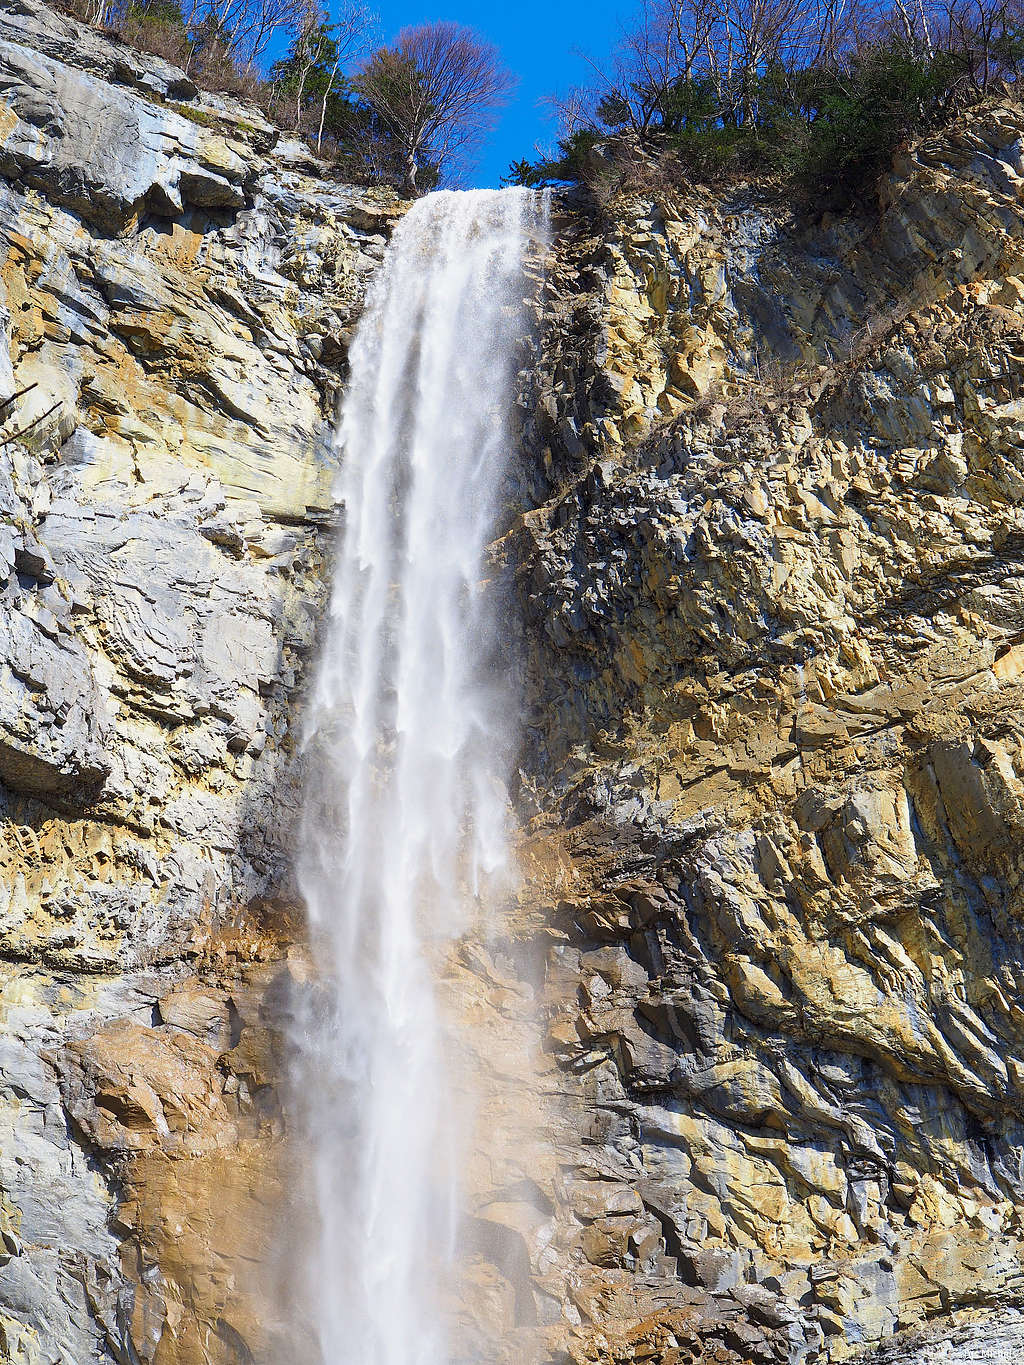 Top of one of the Seerenbach Falls, Switzerland